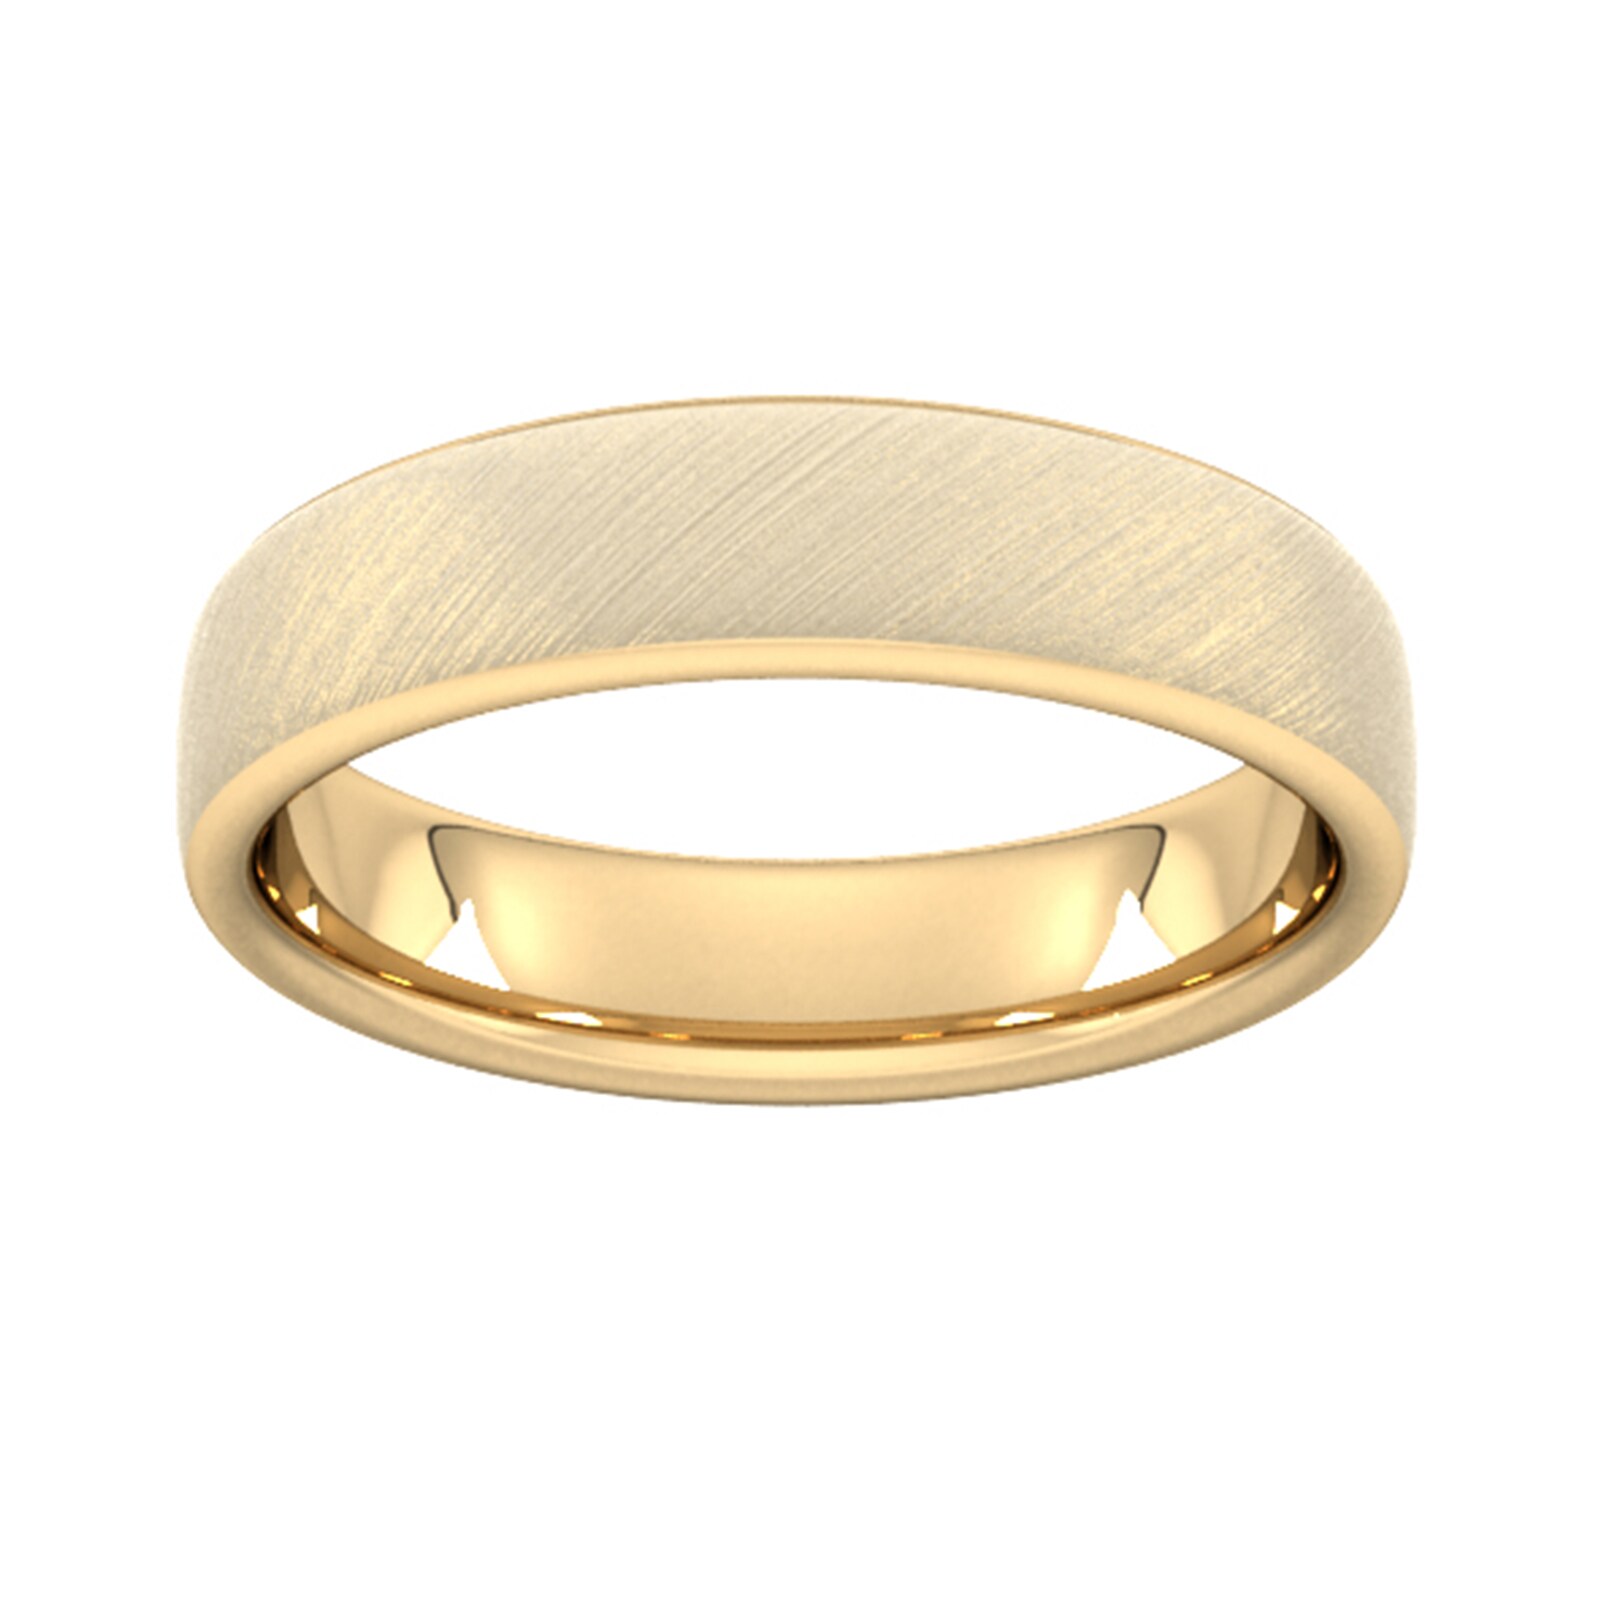 5mm Traditional Court Heavy Diagonal Matt Finish Wedding Ring In 9 Carat Yellow Gold - Ring Size L